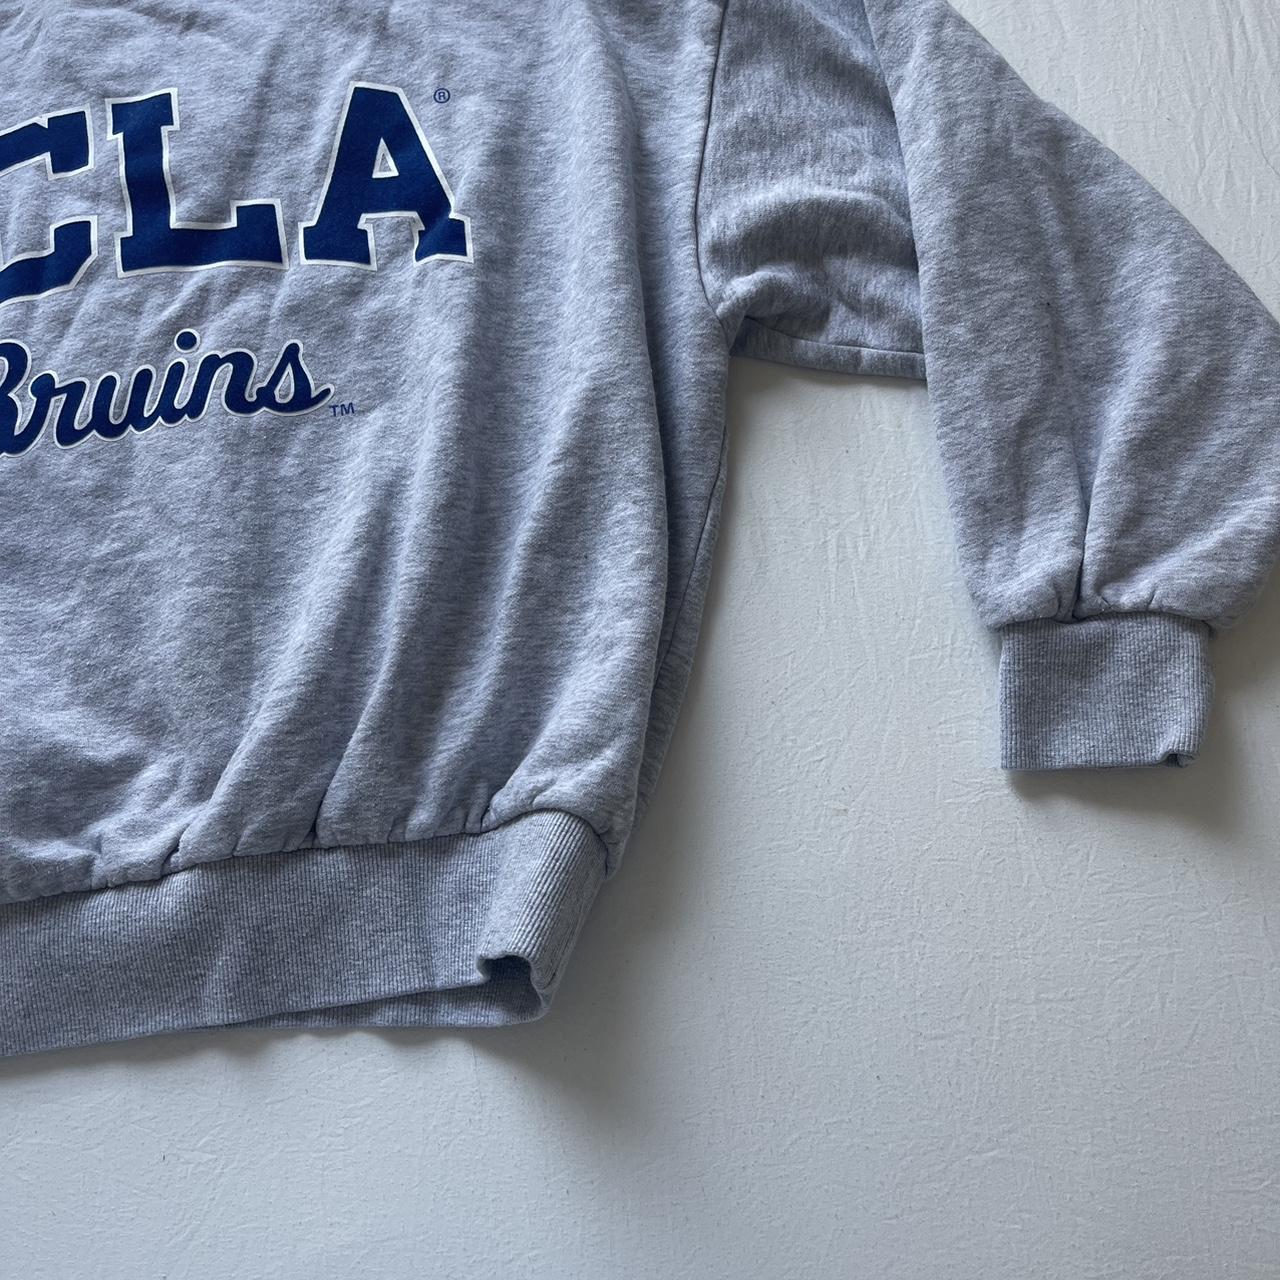 Fanatics UCLA Bruins sweatshirt / hoodie - - Depop